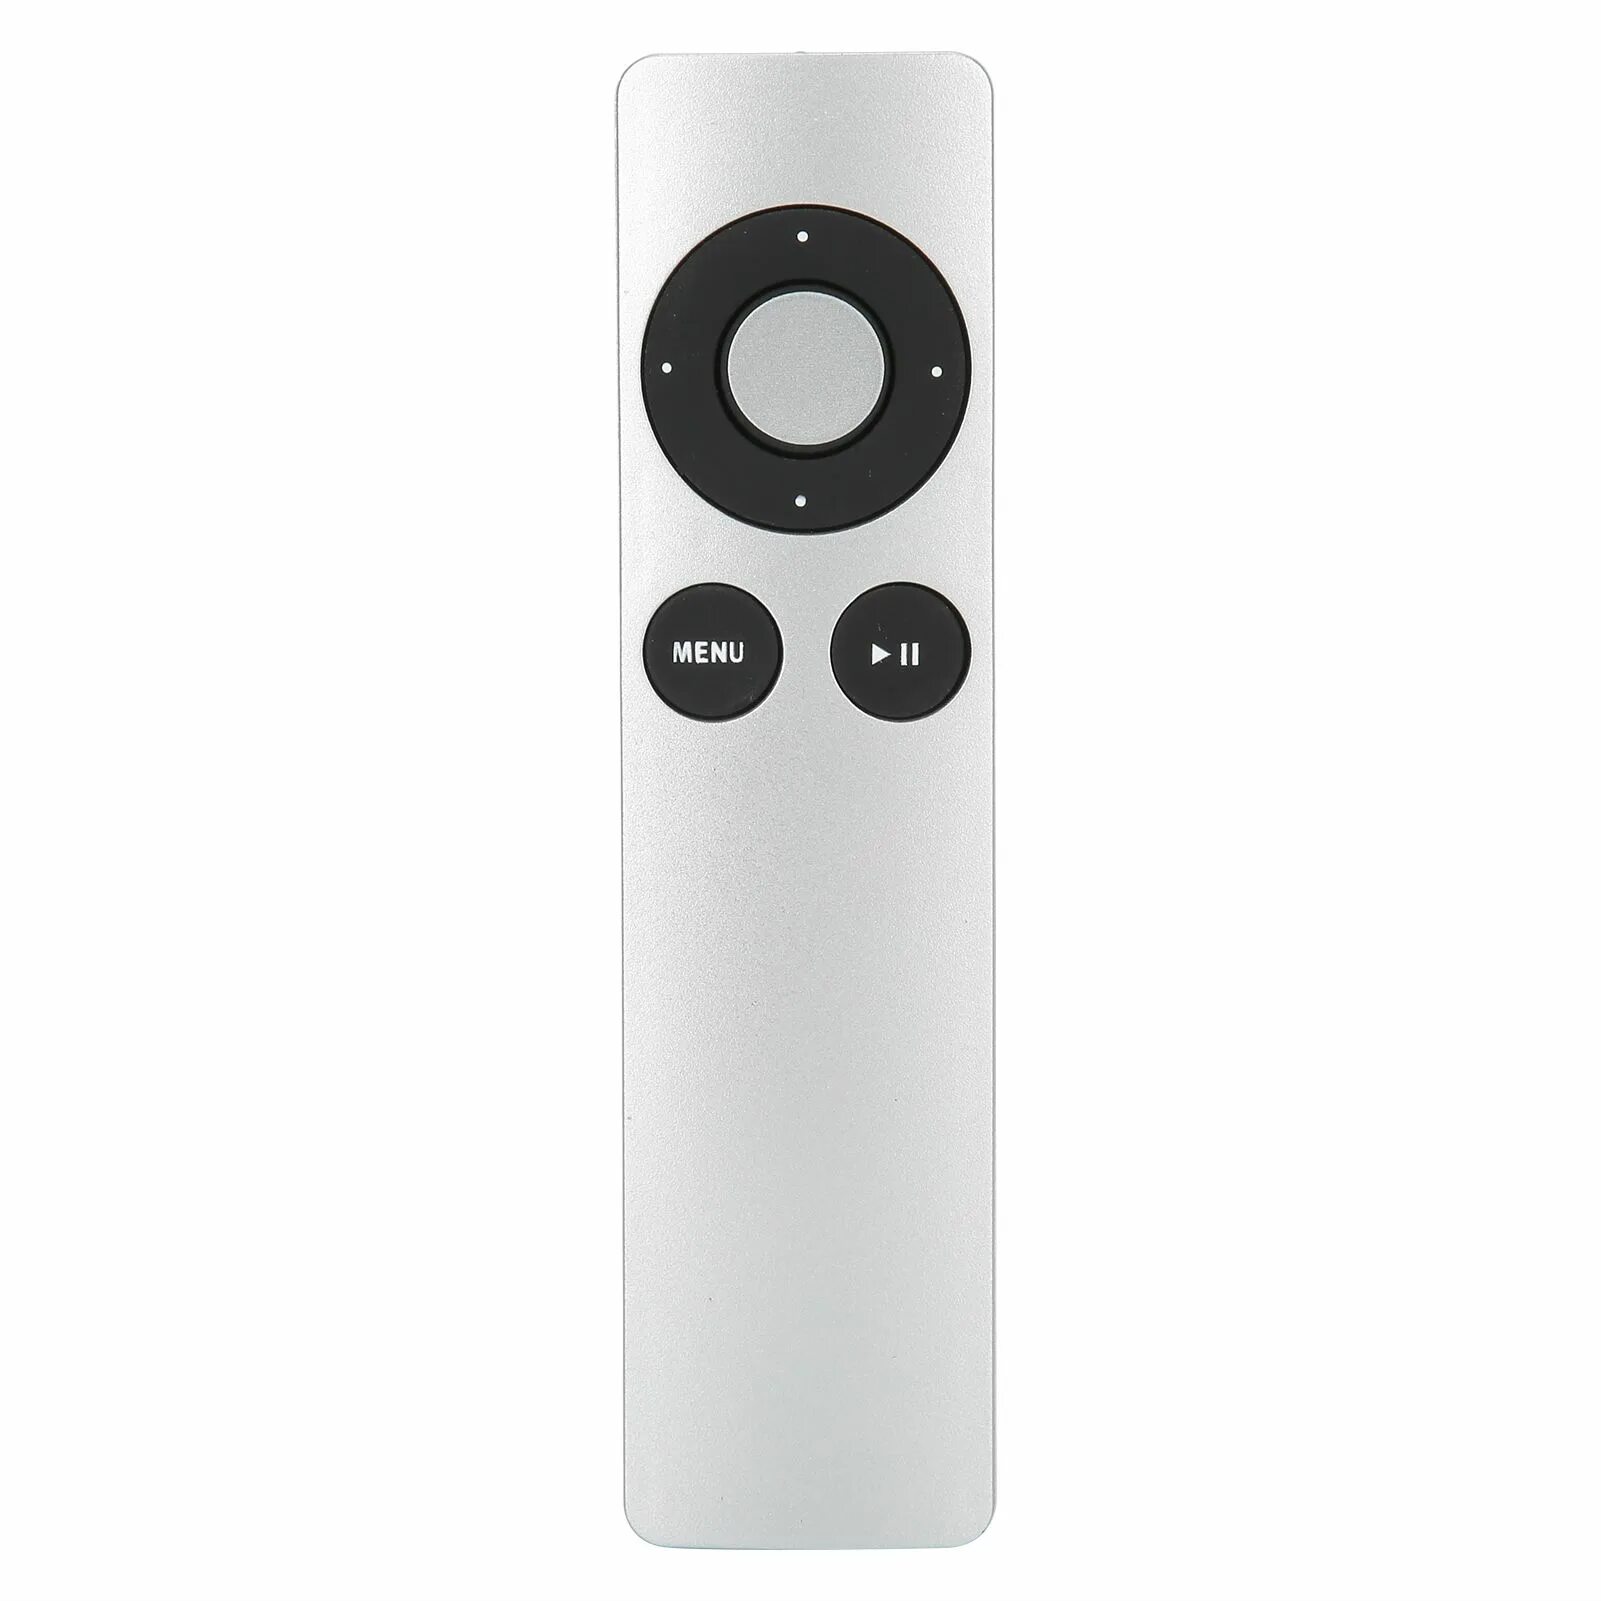 Пульт эппл тв. Пульт Apple TV 3. Пульт Ду Apple TV Remote. Apple Remote mm4t2zm a. Apple a1156 Remote Control.